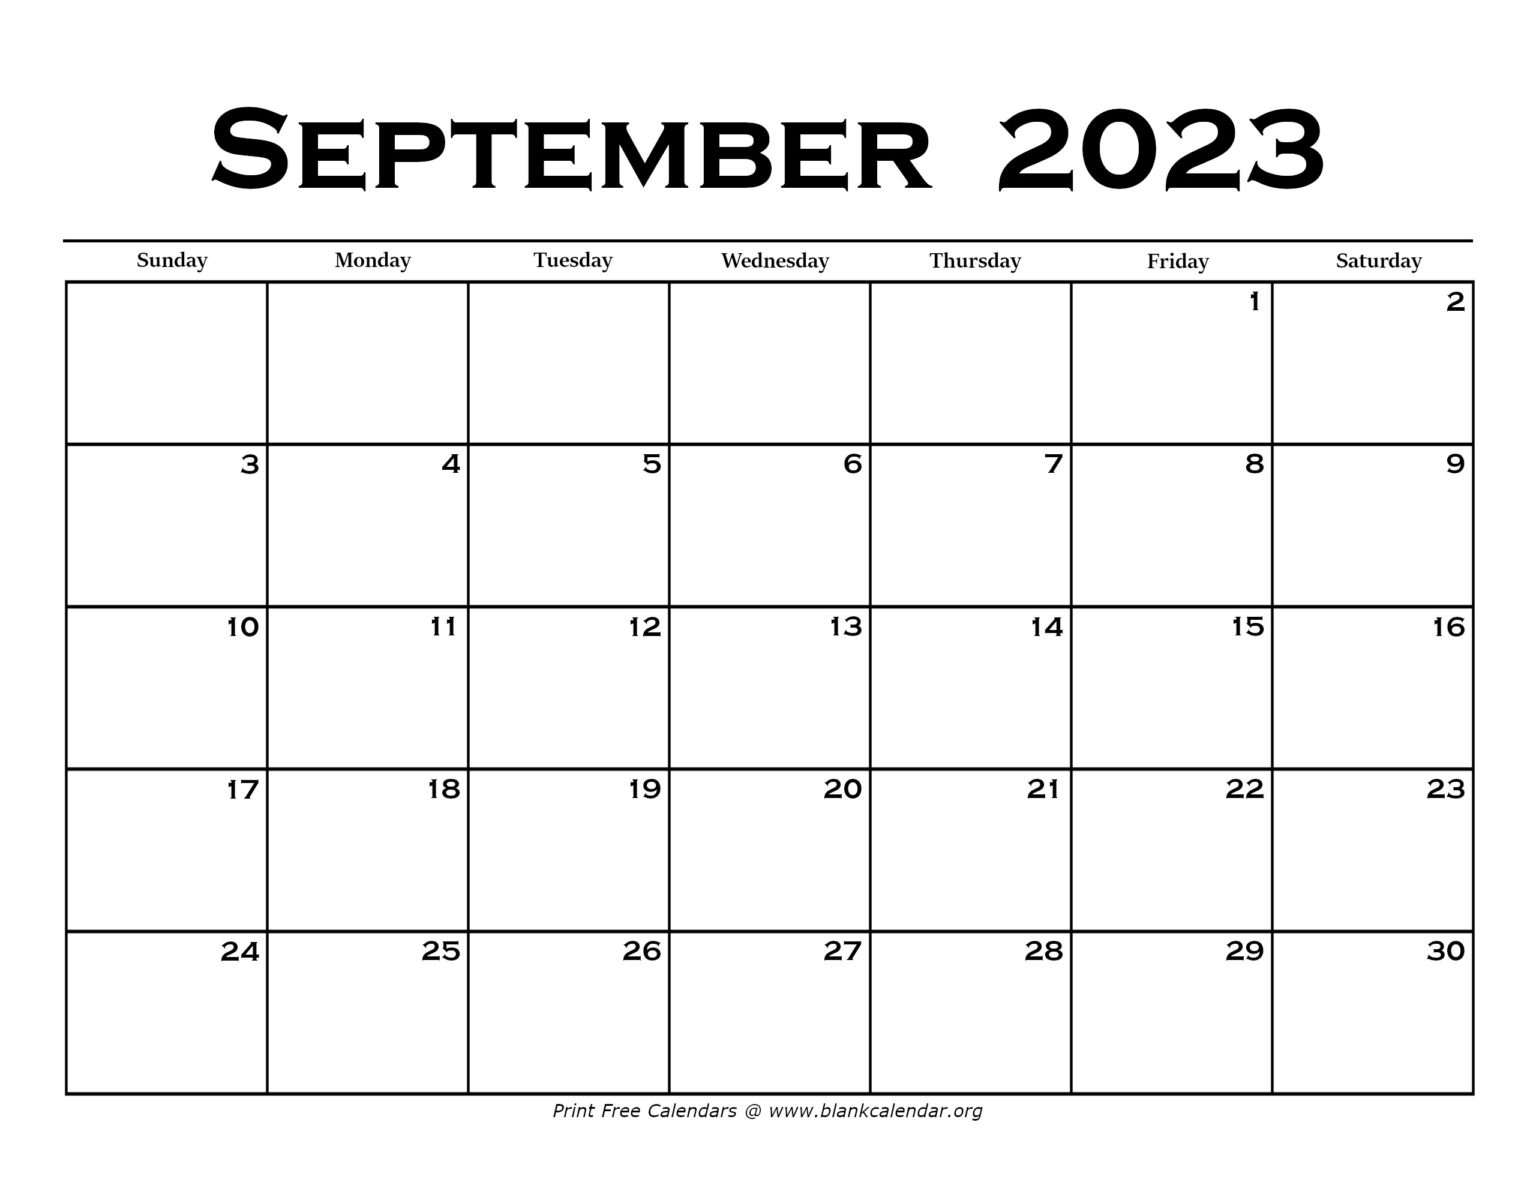 september-2023-calendar-blank-calendar